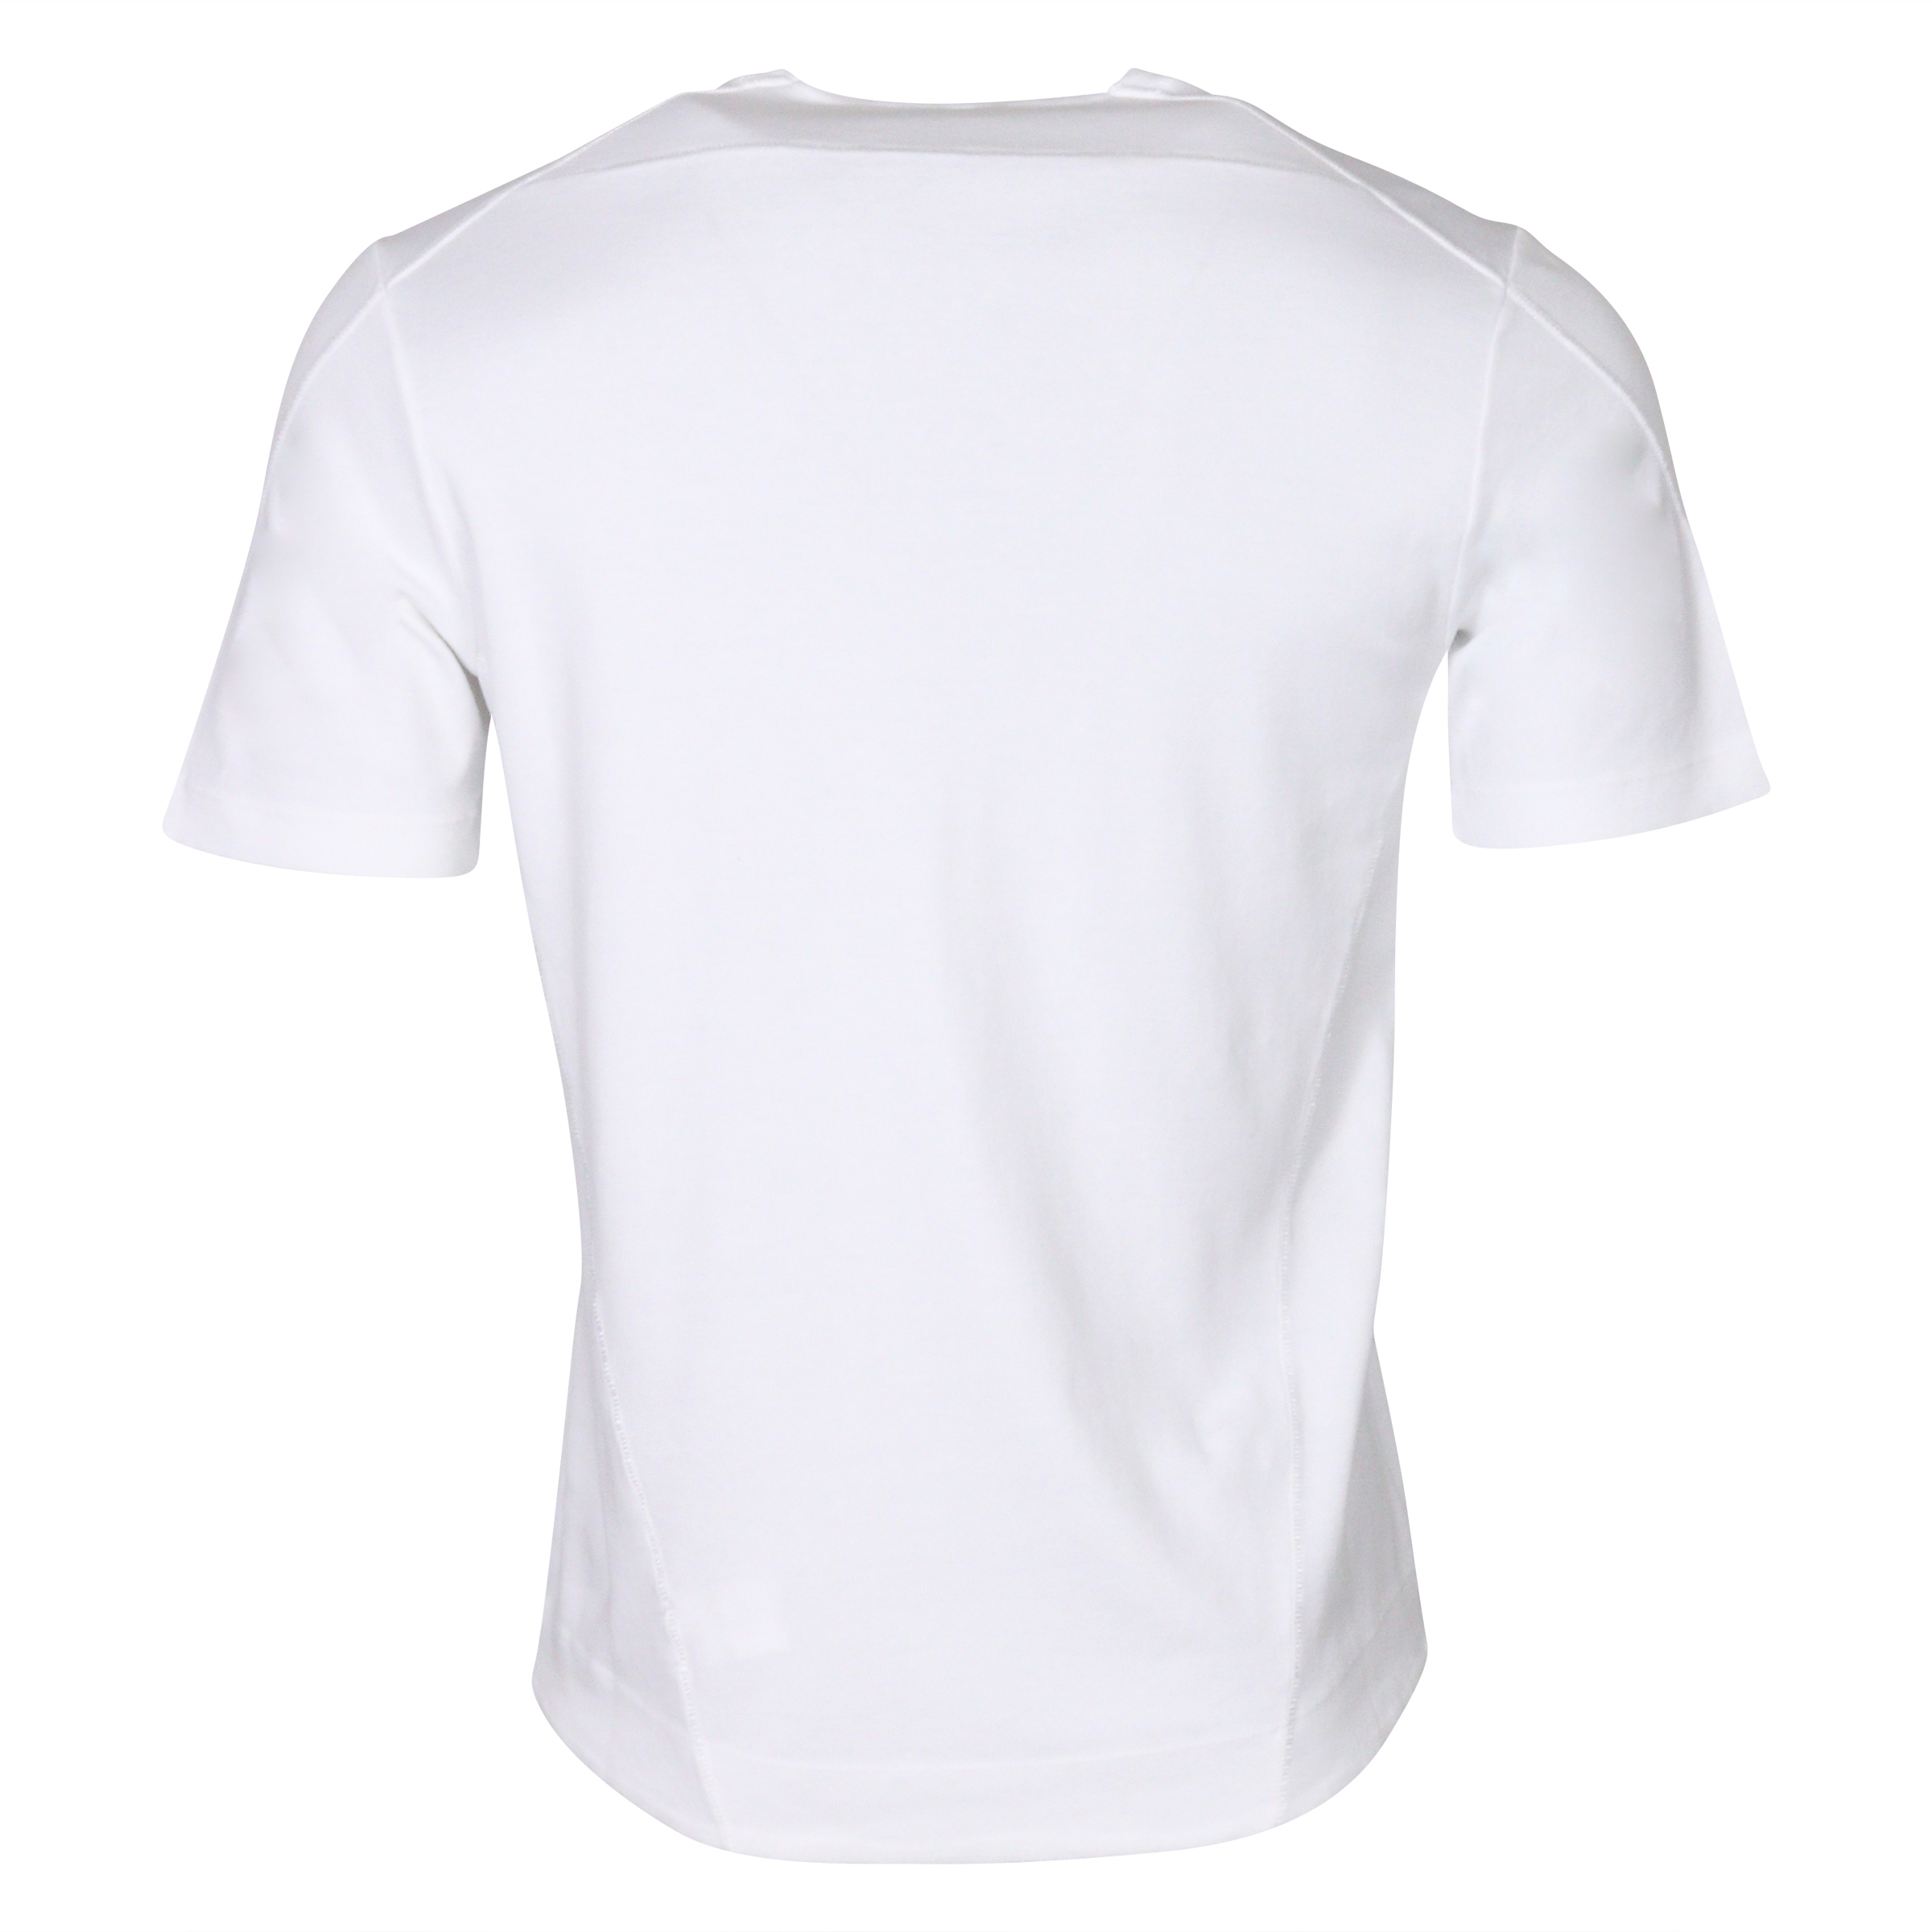 MenTransit Uomo Cotton T-Shirt Offwhite